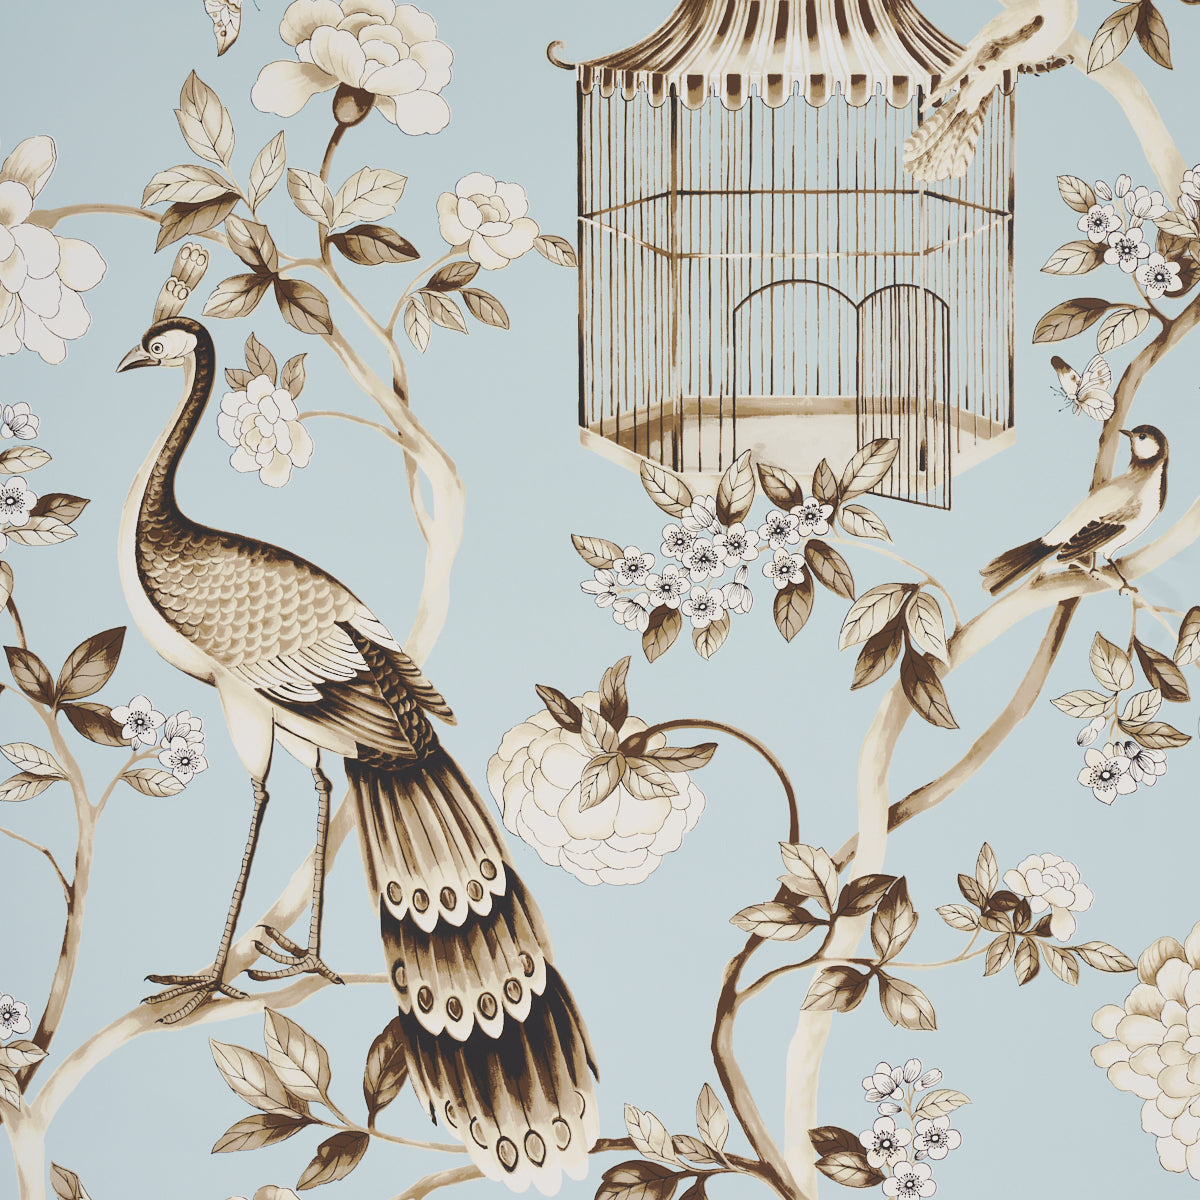 Find 5004080 Oiseaux Et Fleurs Mineral by Schumacher Wallpaper